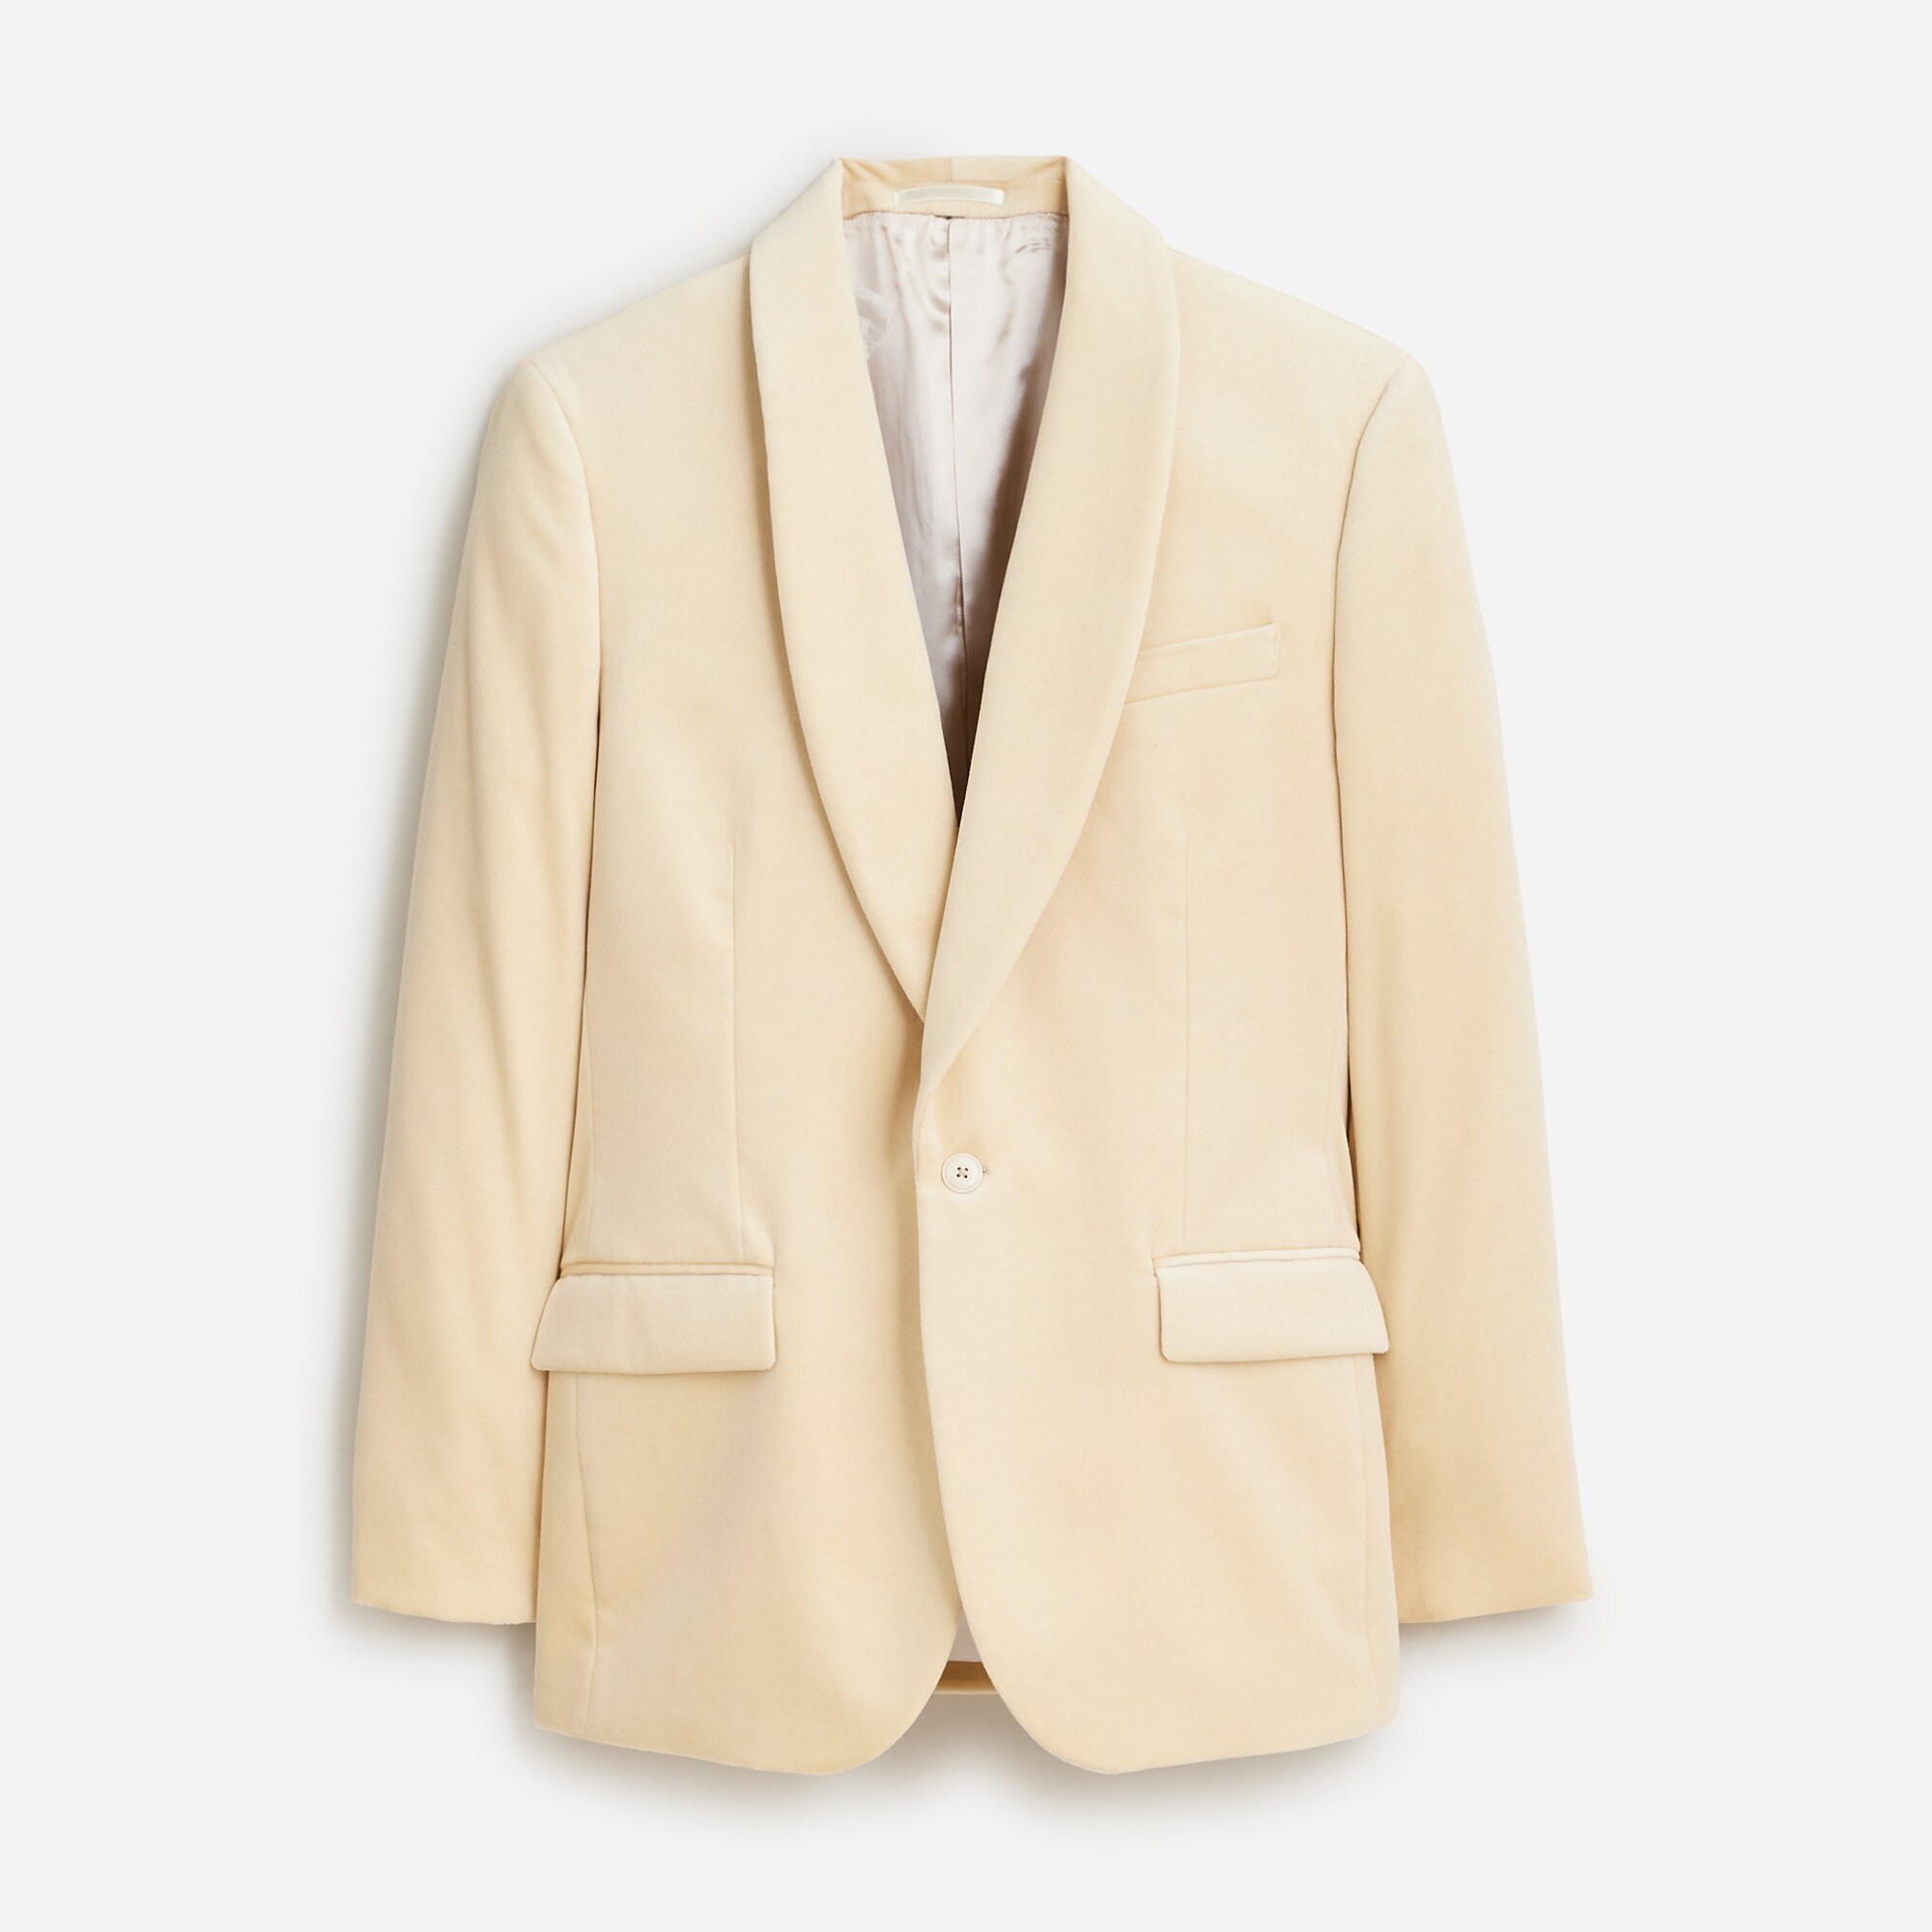  Ludlow Slim-fit shawl-collar tuxedo jacket in velvet